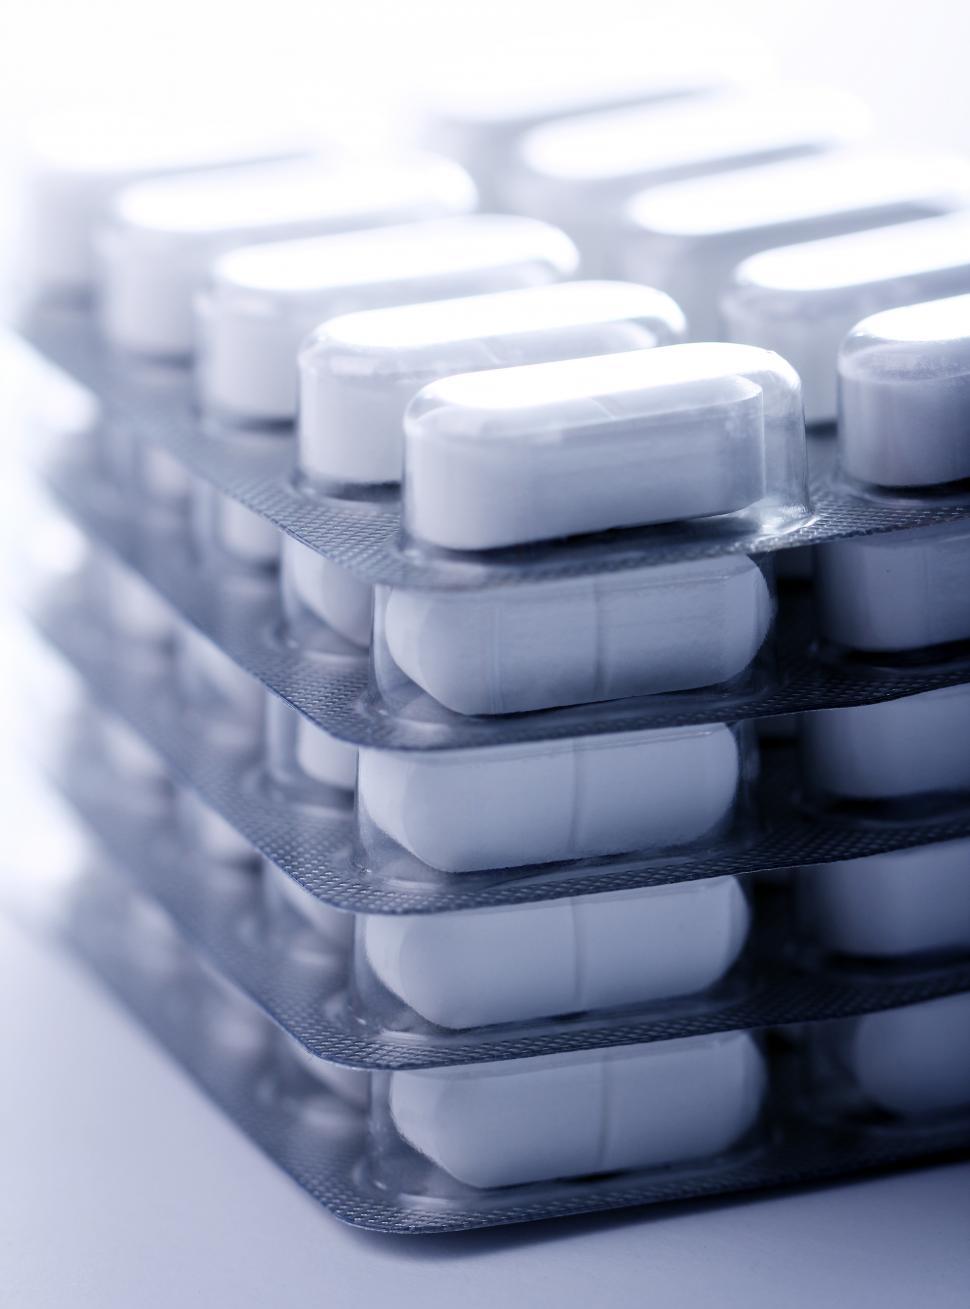 Free Image of Pack of pills in blister packs 